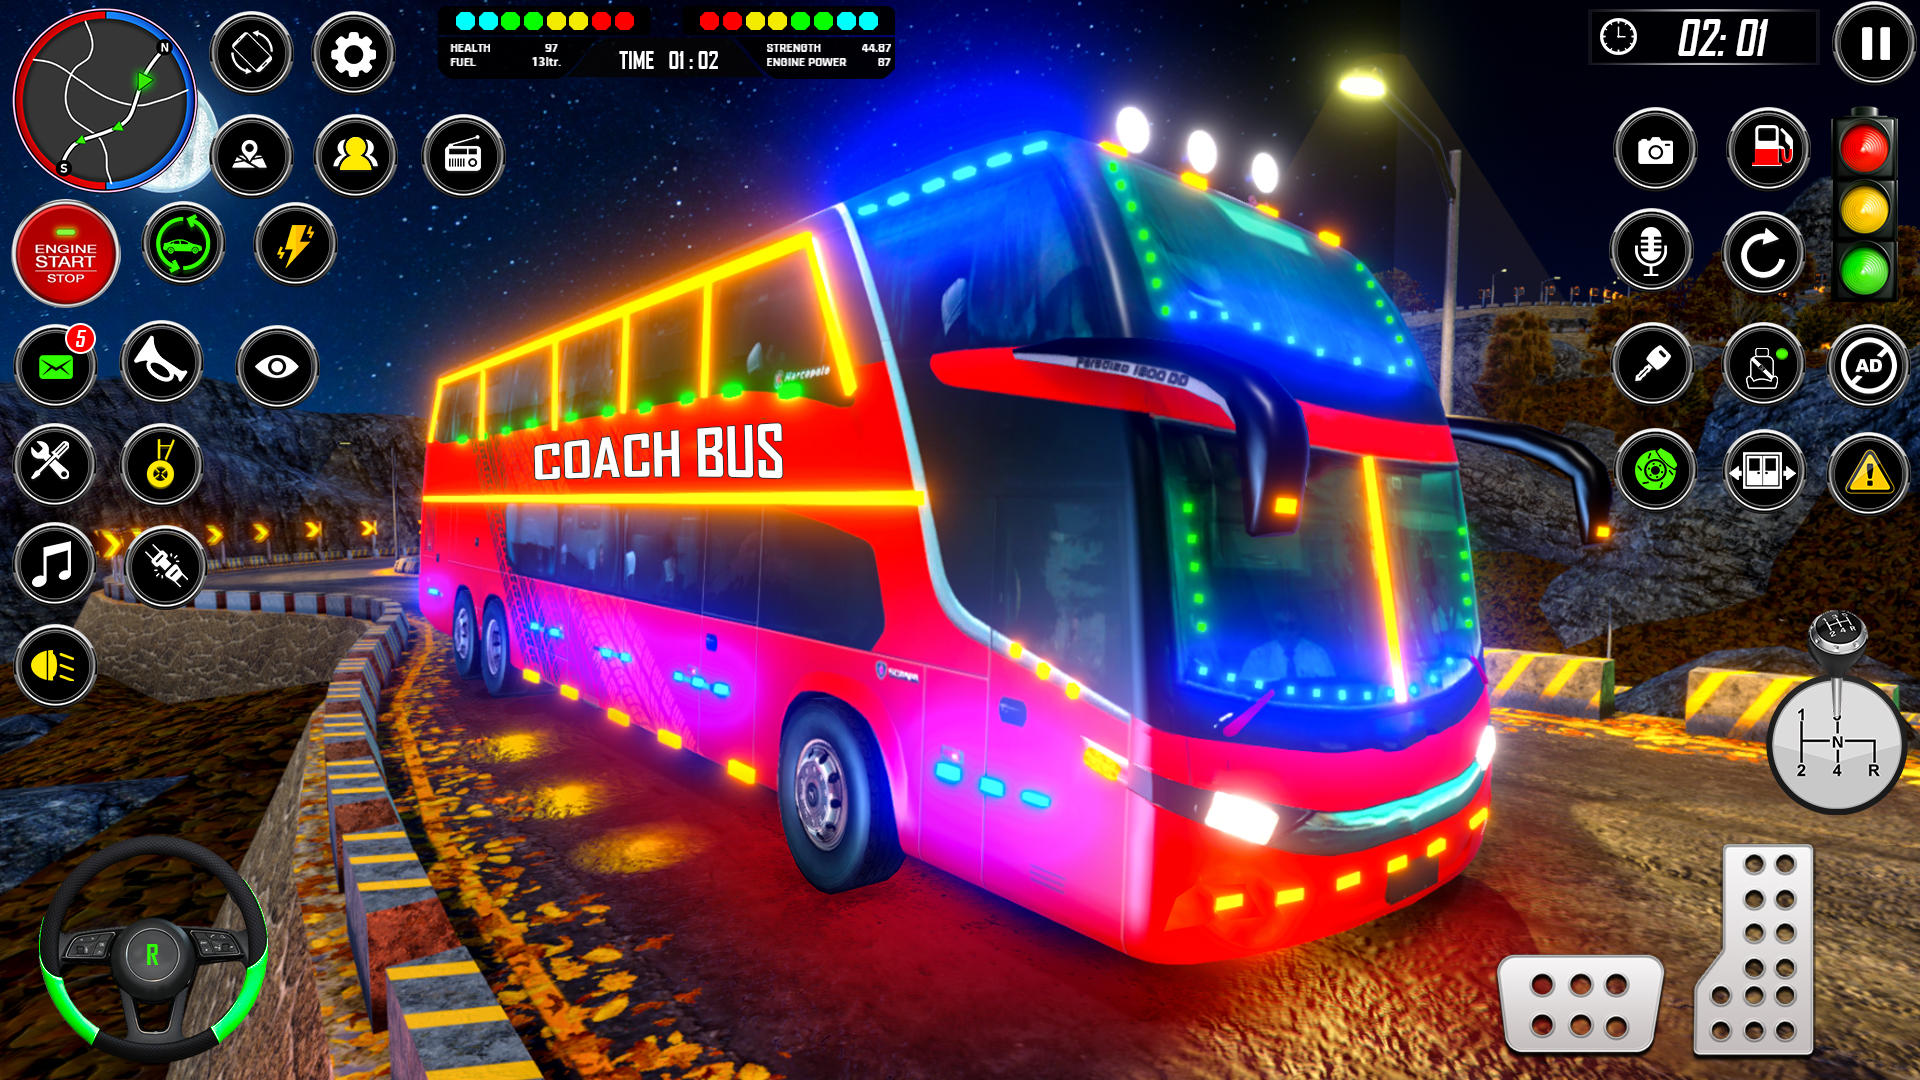 Screenshot 1 of jogos de ônibus 3.6